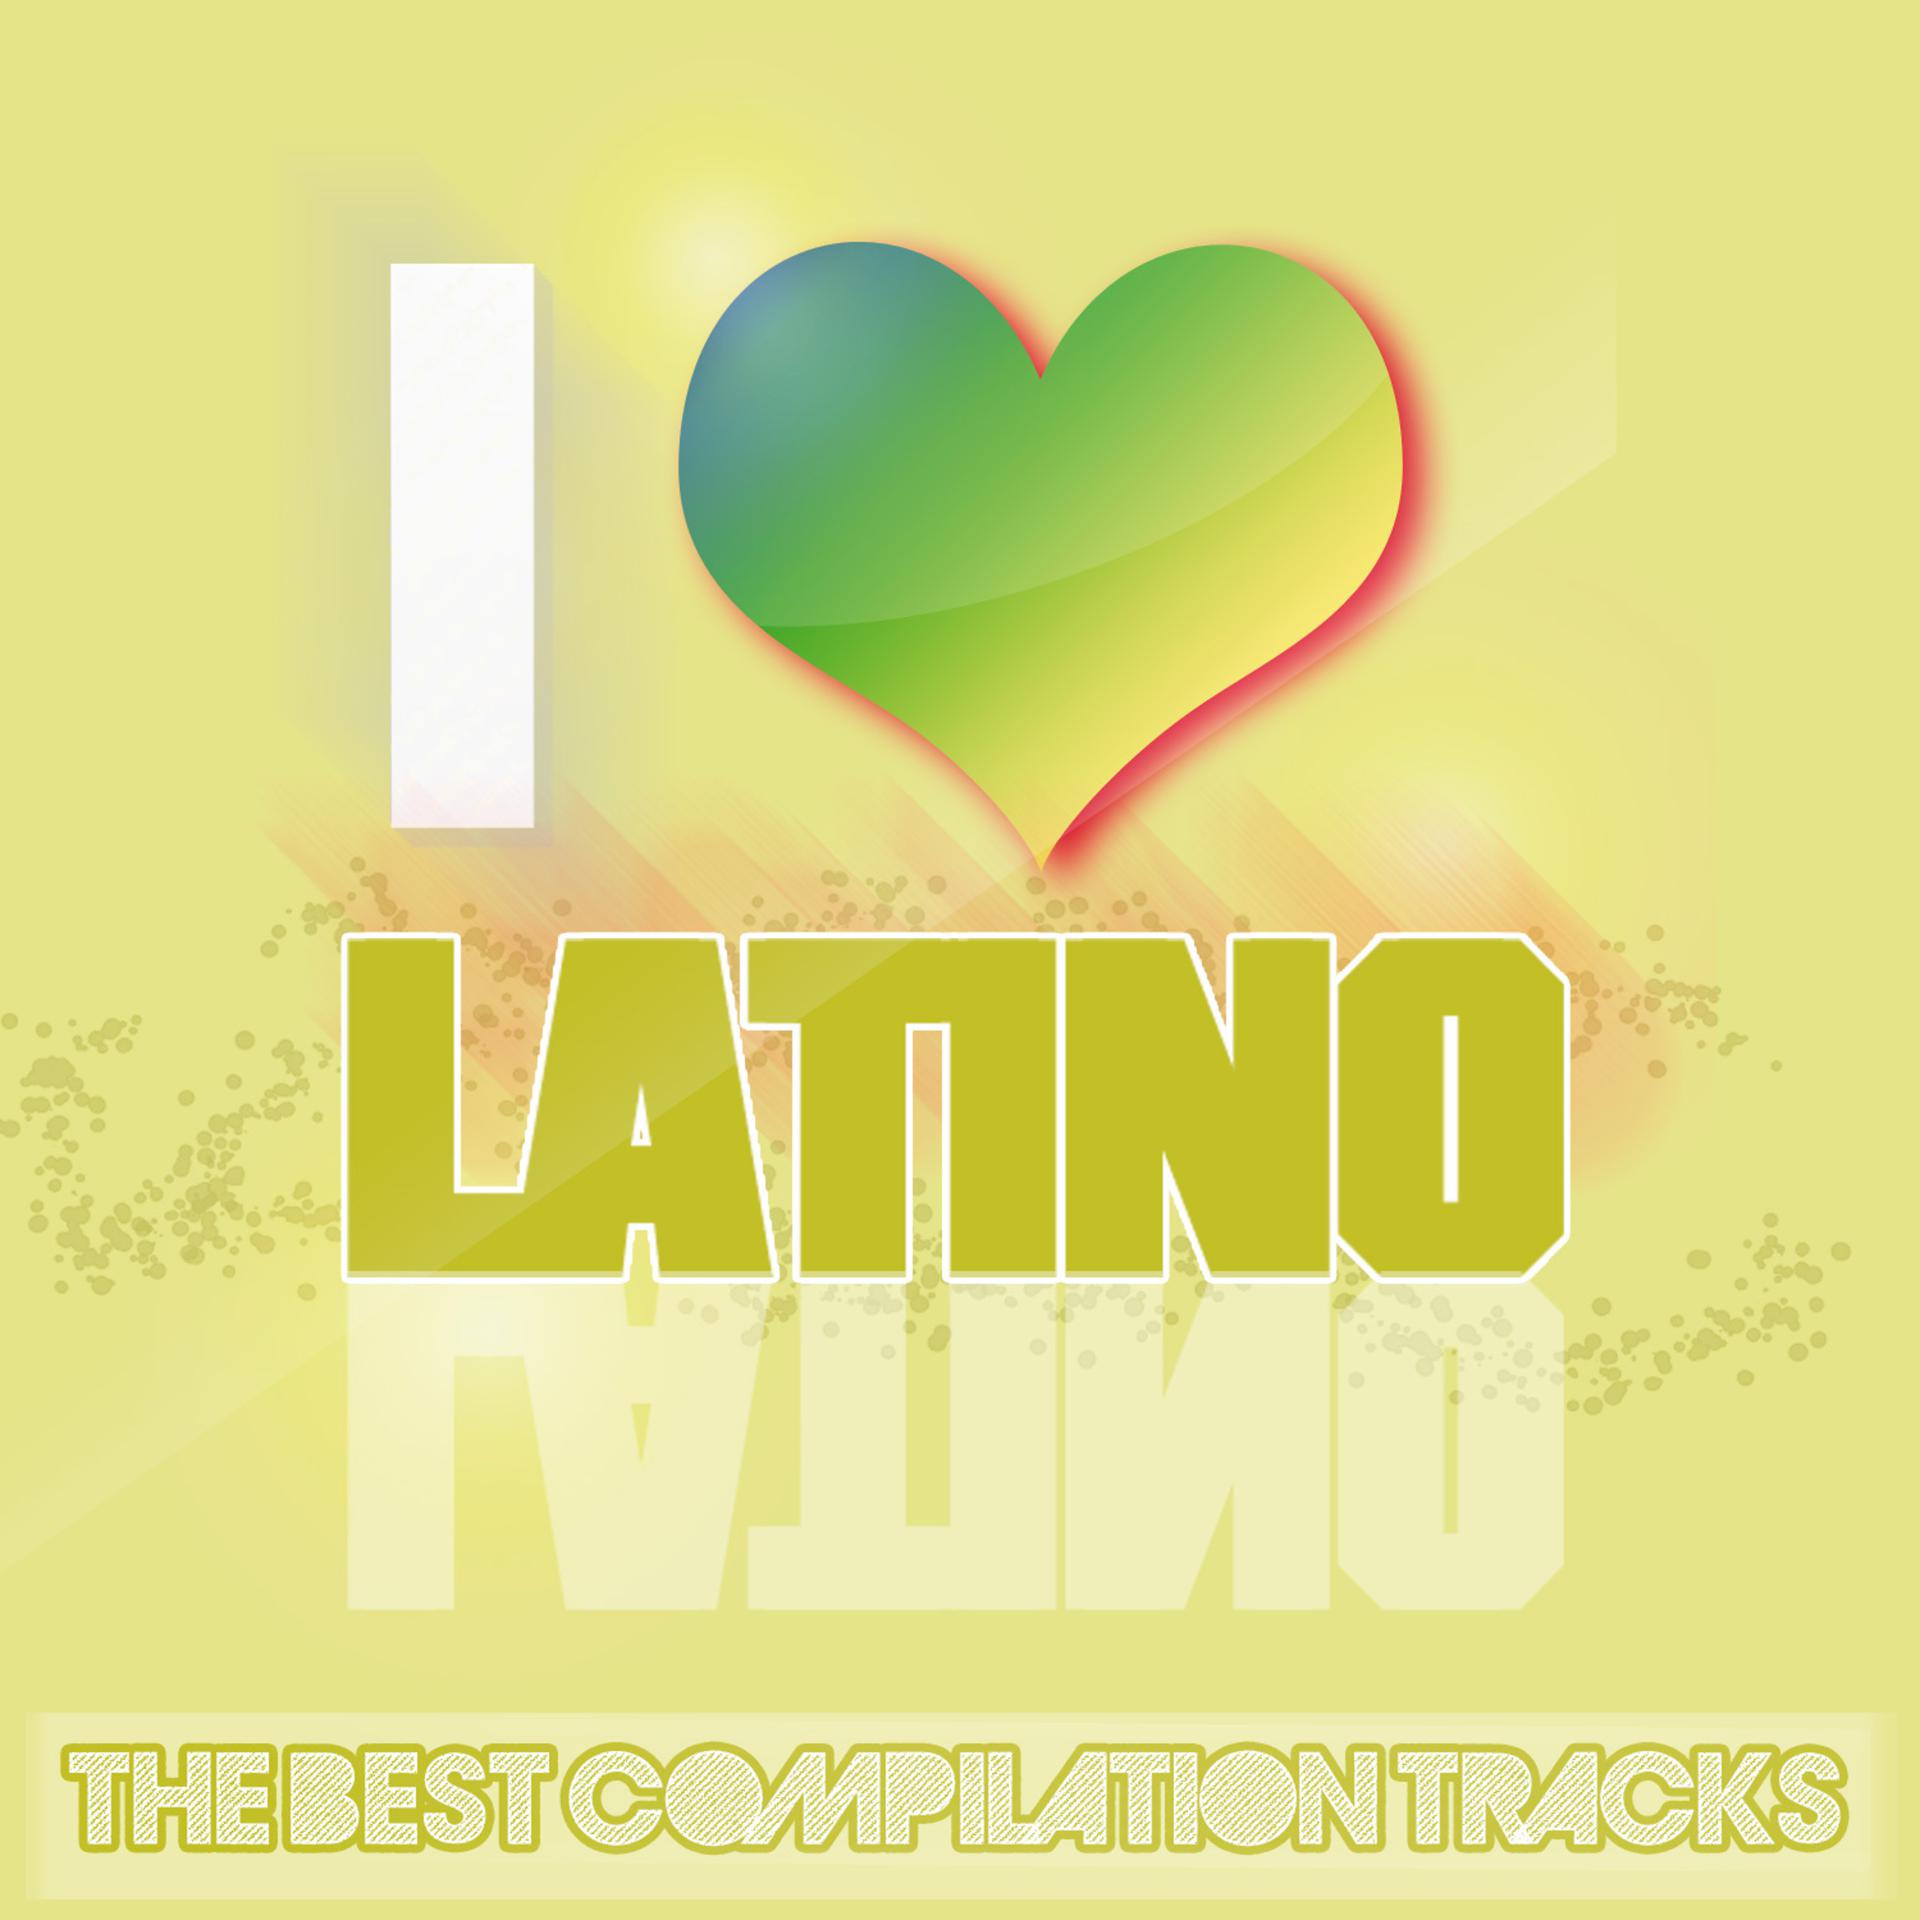 Постер альбома I Love Latino